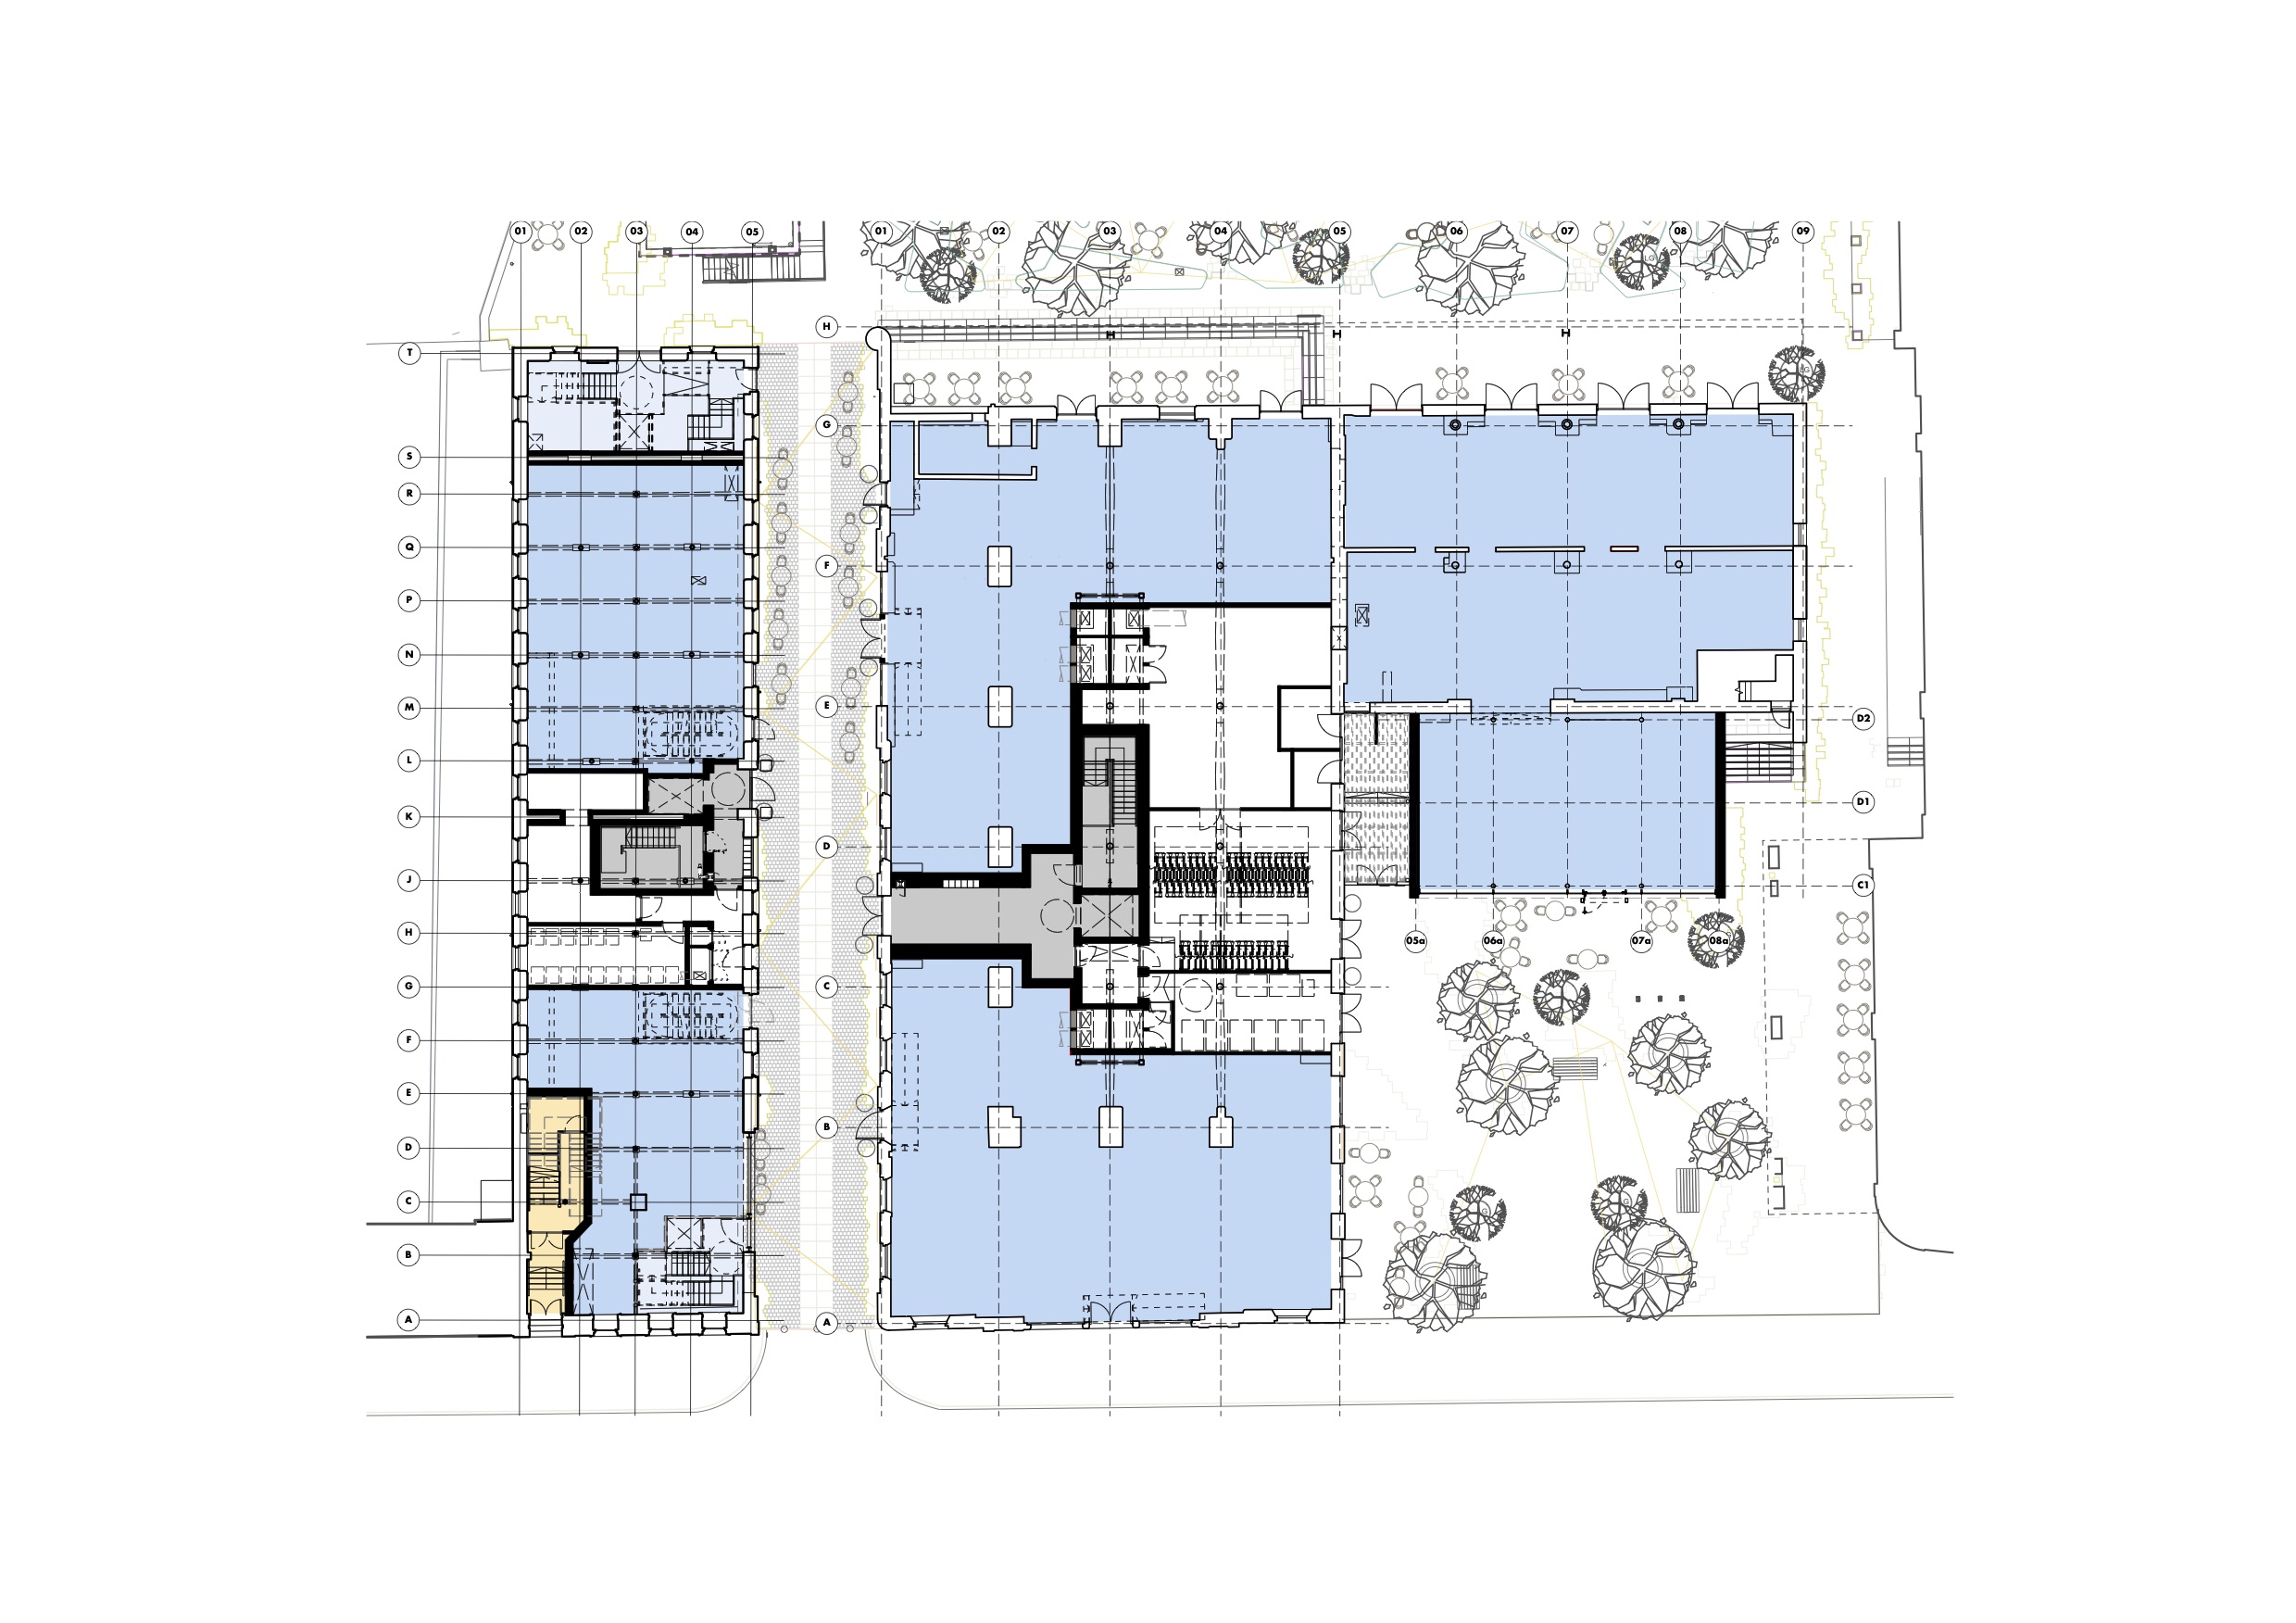 Kampus ground floor plan